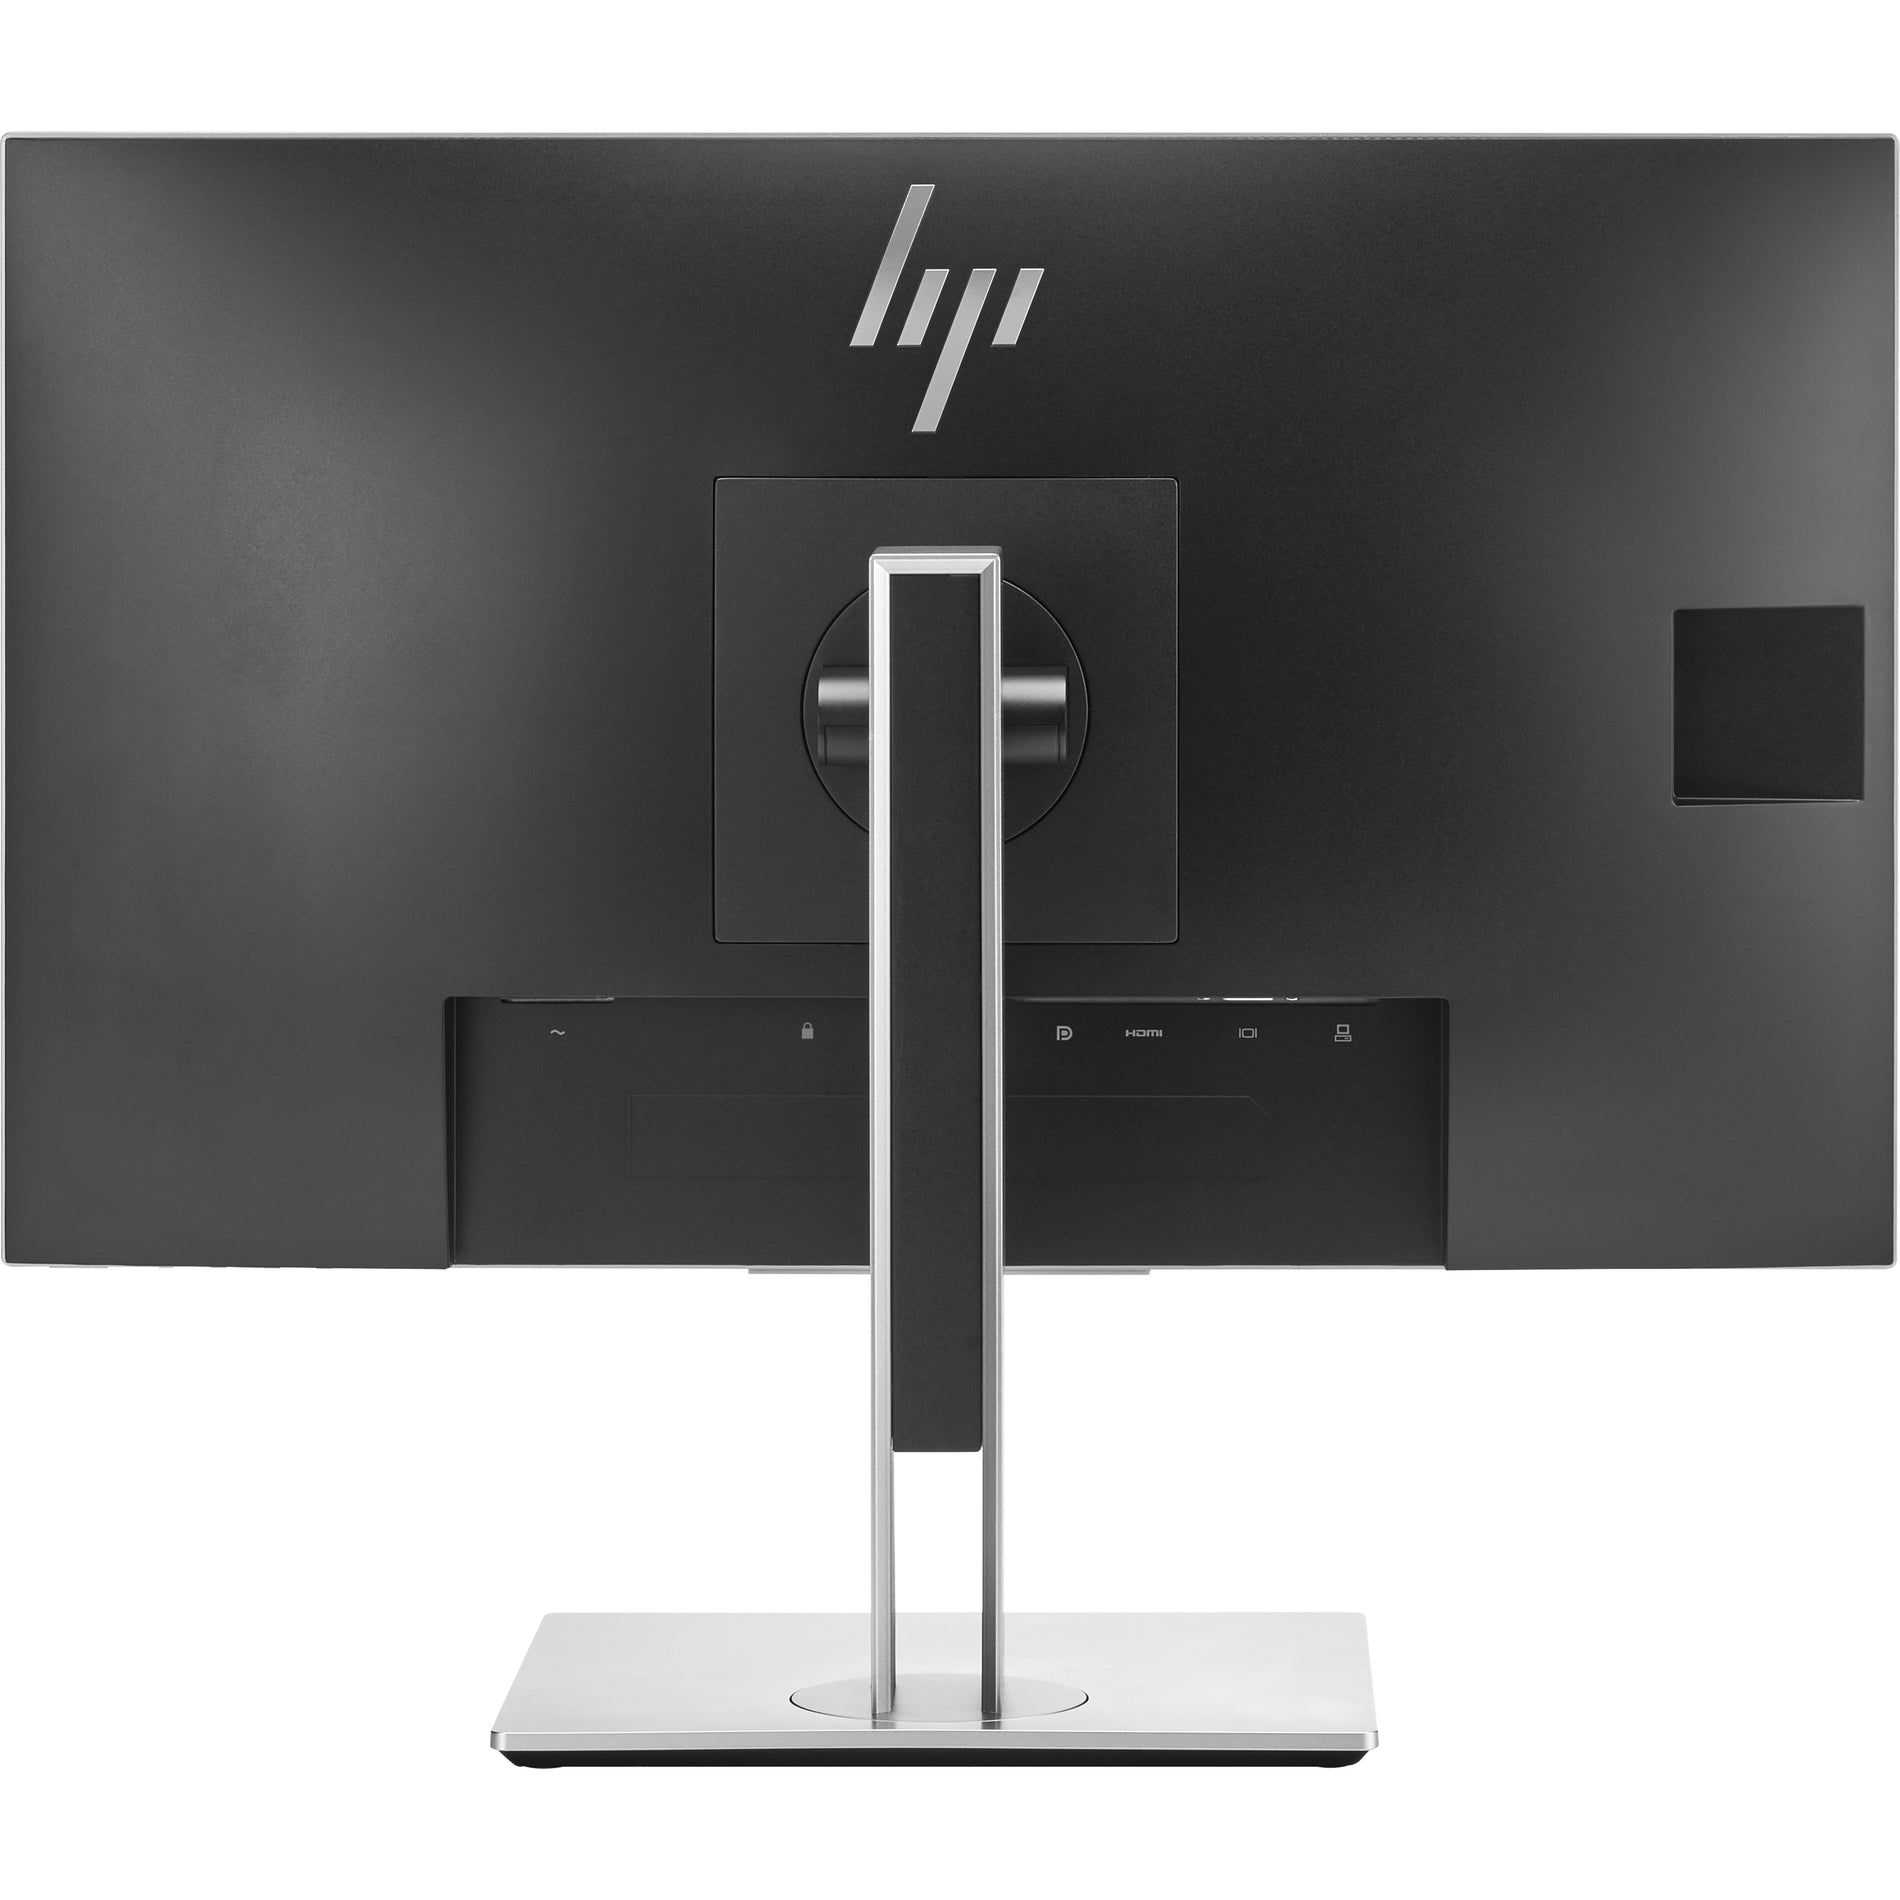 HP 1FH47A8 EliteDisplay E243 23.8" Full HD LCD Monitor, 250 Nit, 1920 x 1080, 3 Year Warranty, Energy Star, TCO Certified, USB Hub